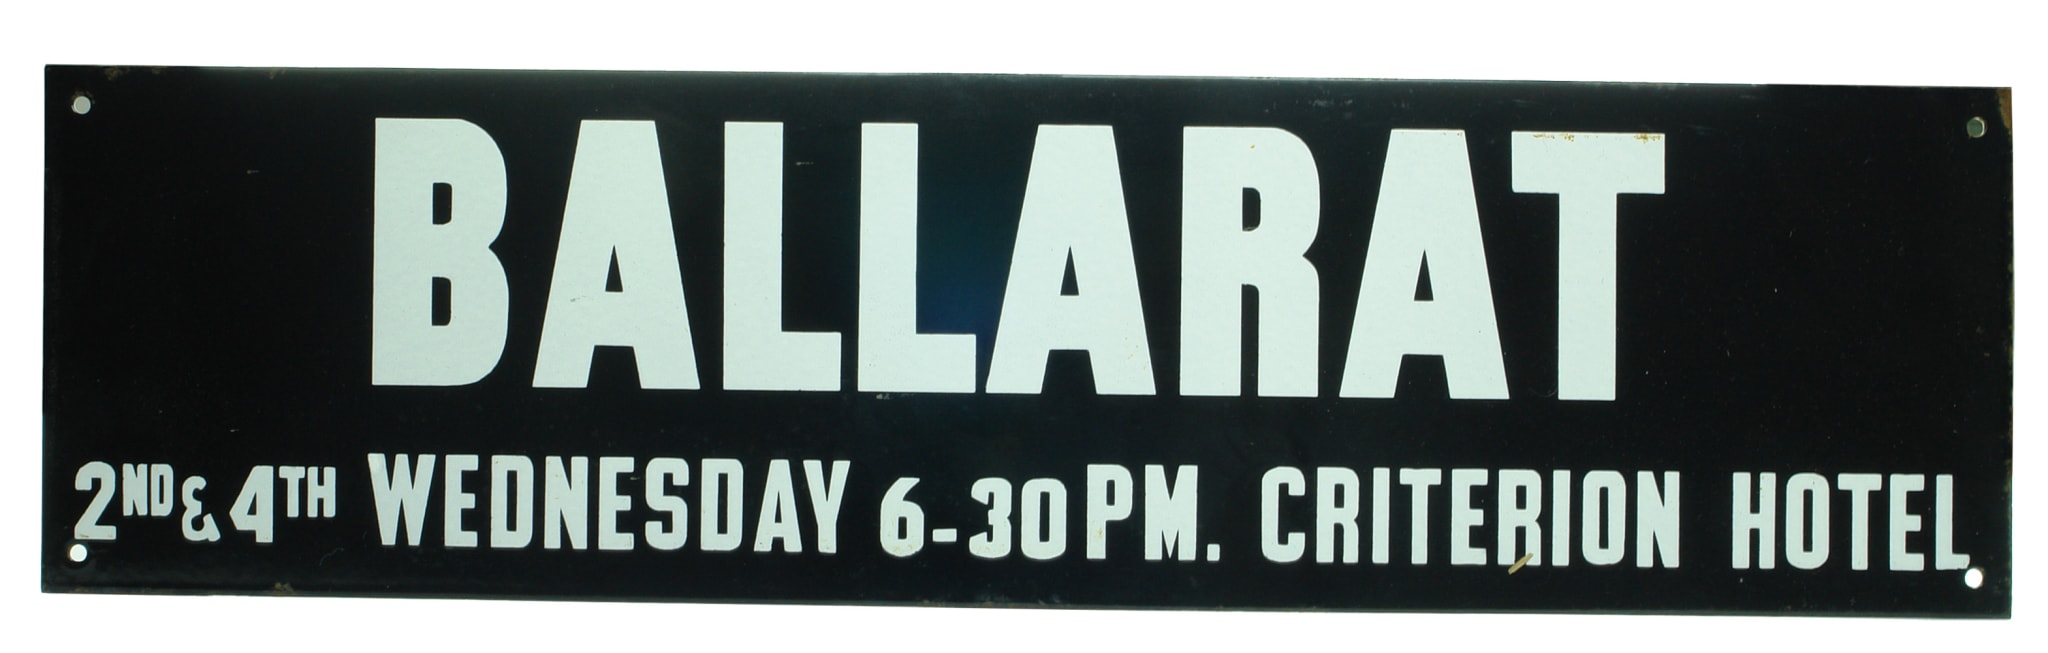 Ballarat Criterion Hotel Enamel Sign